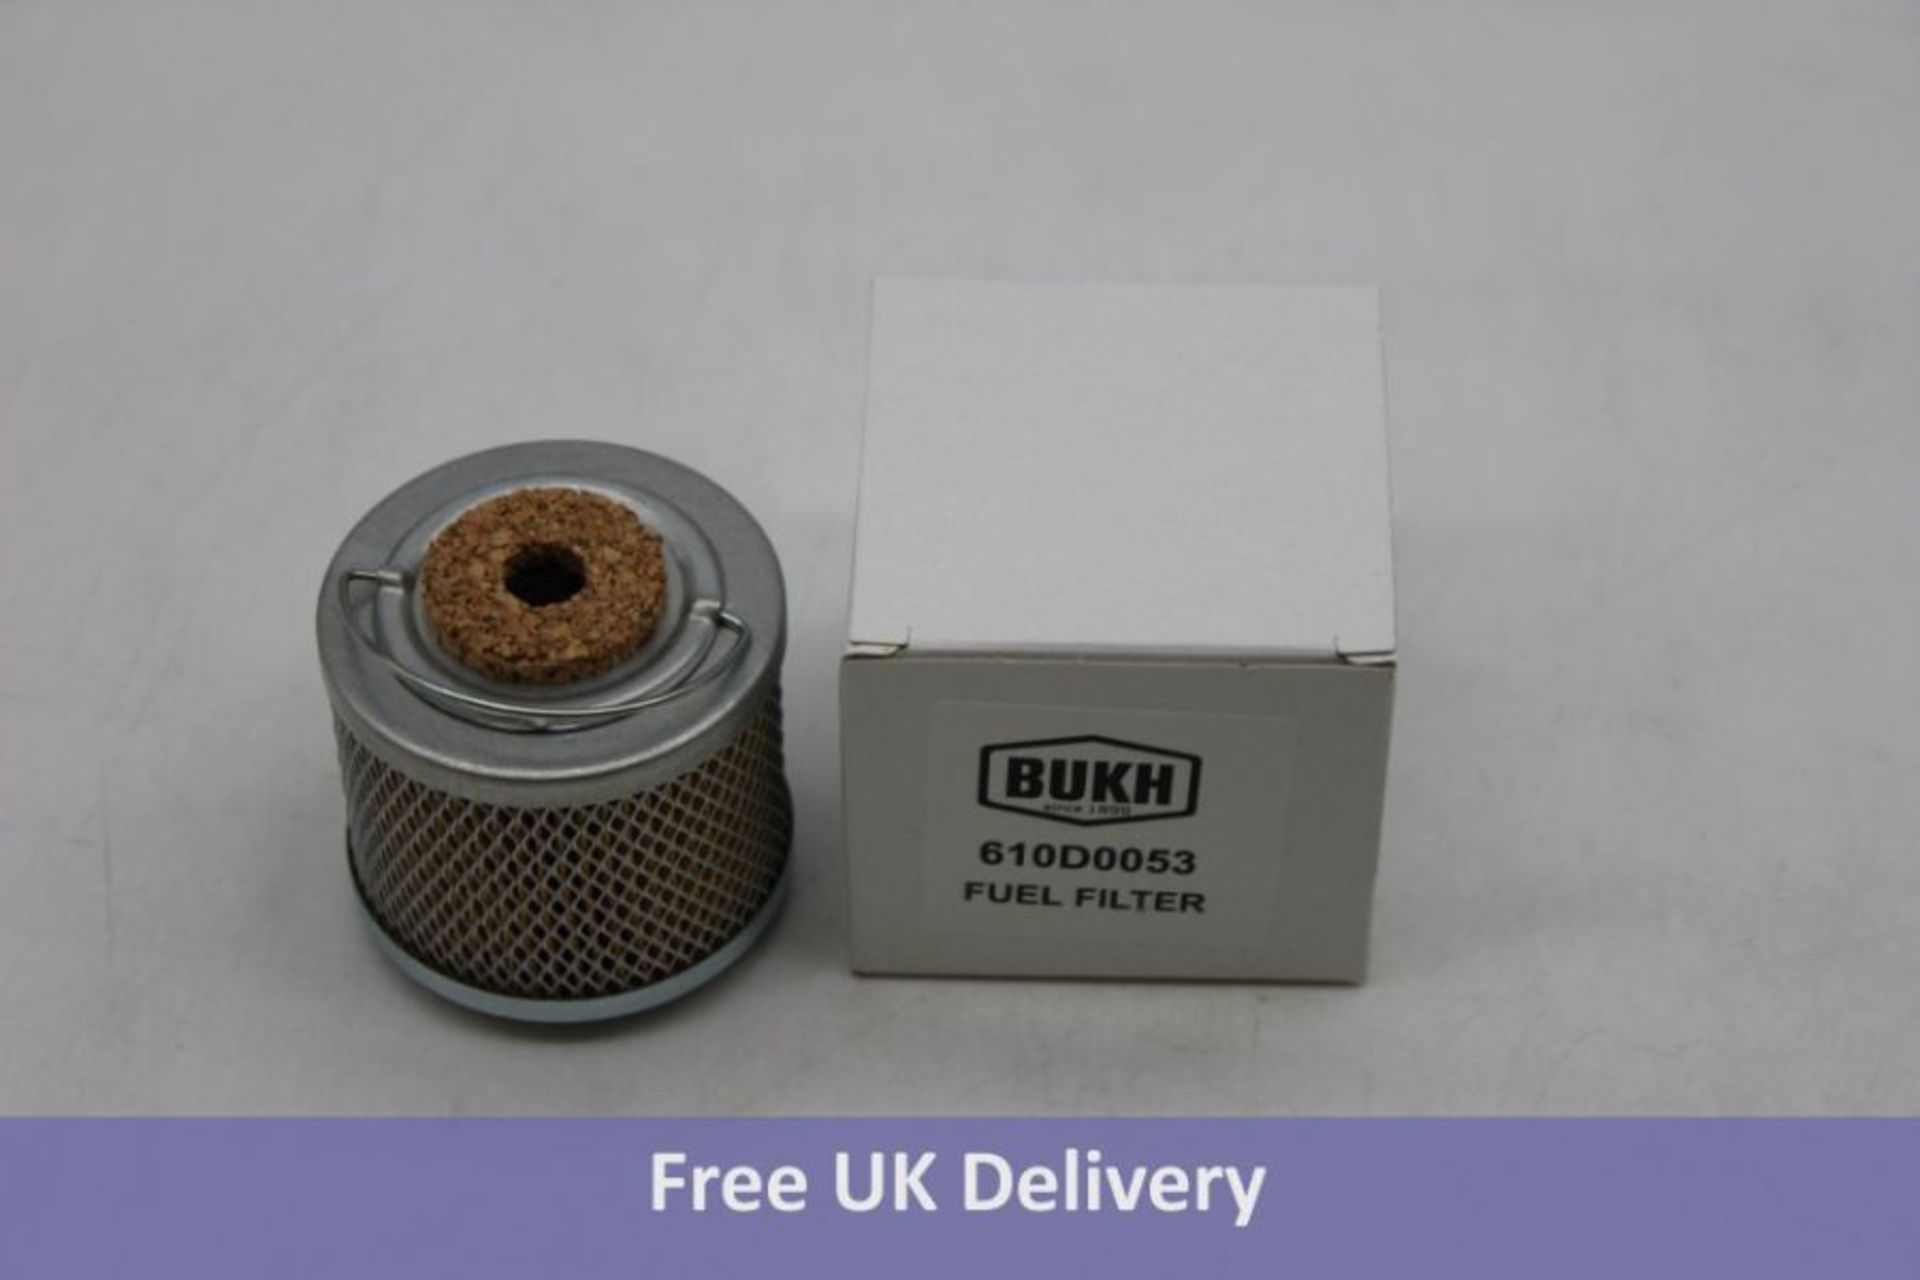 Four BUKH 610D0053 Fuel Filter Inserts